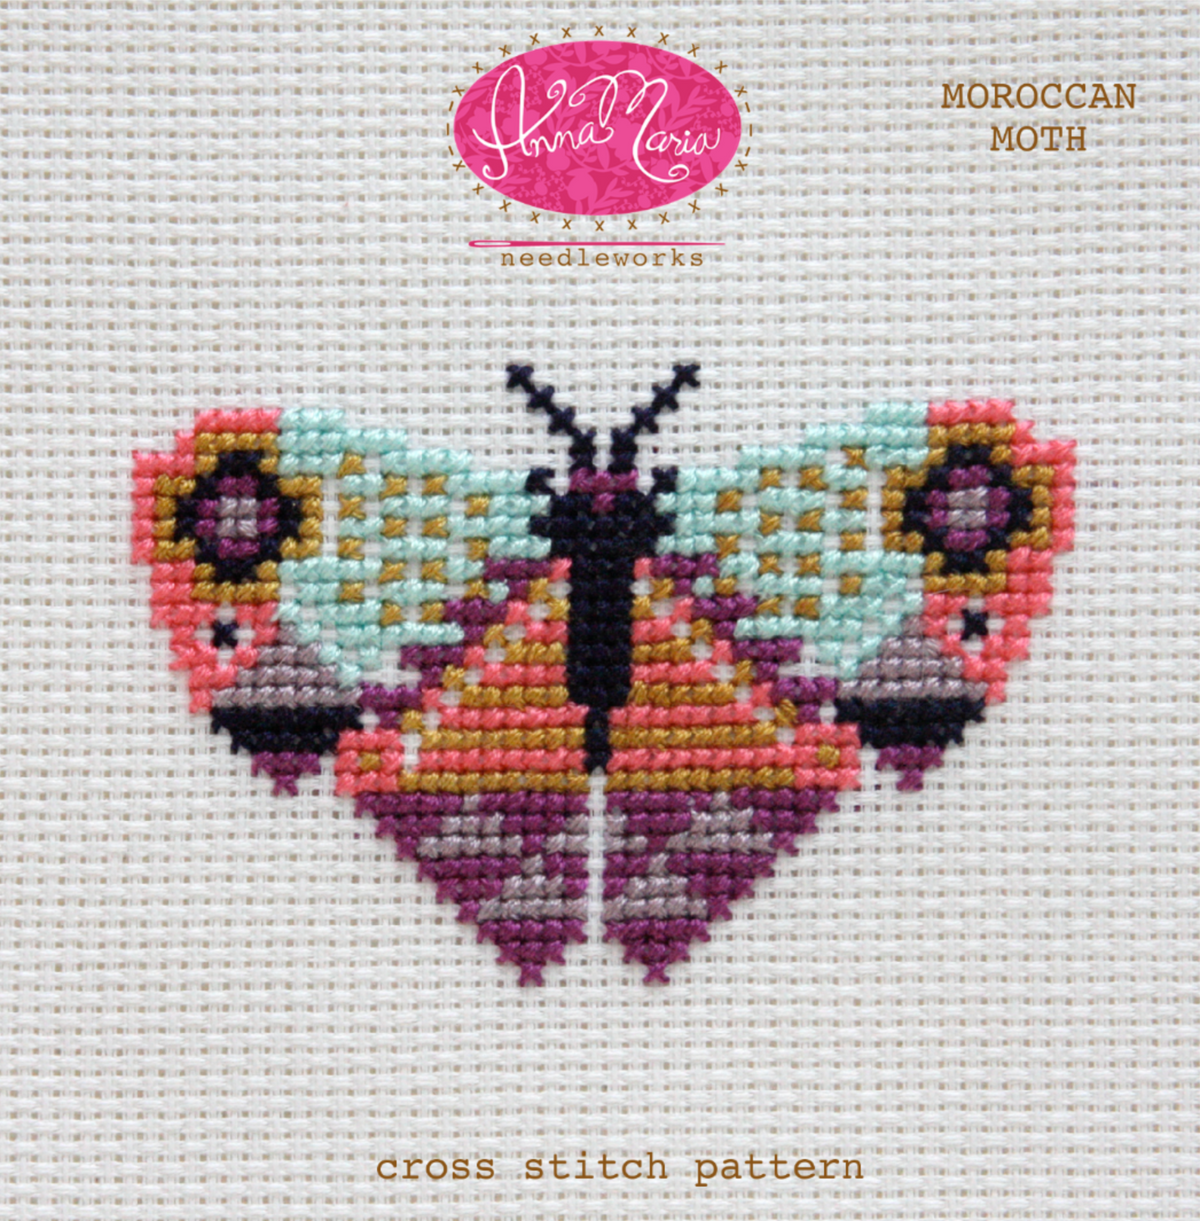 Moroccan Moth Cross Stitch Pattern